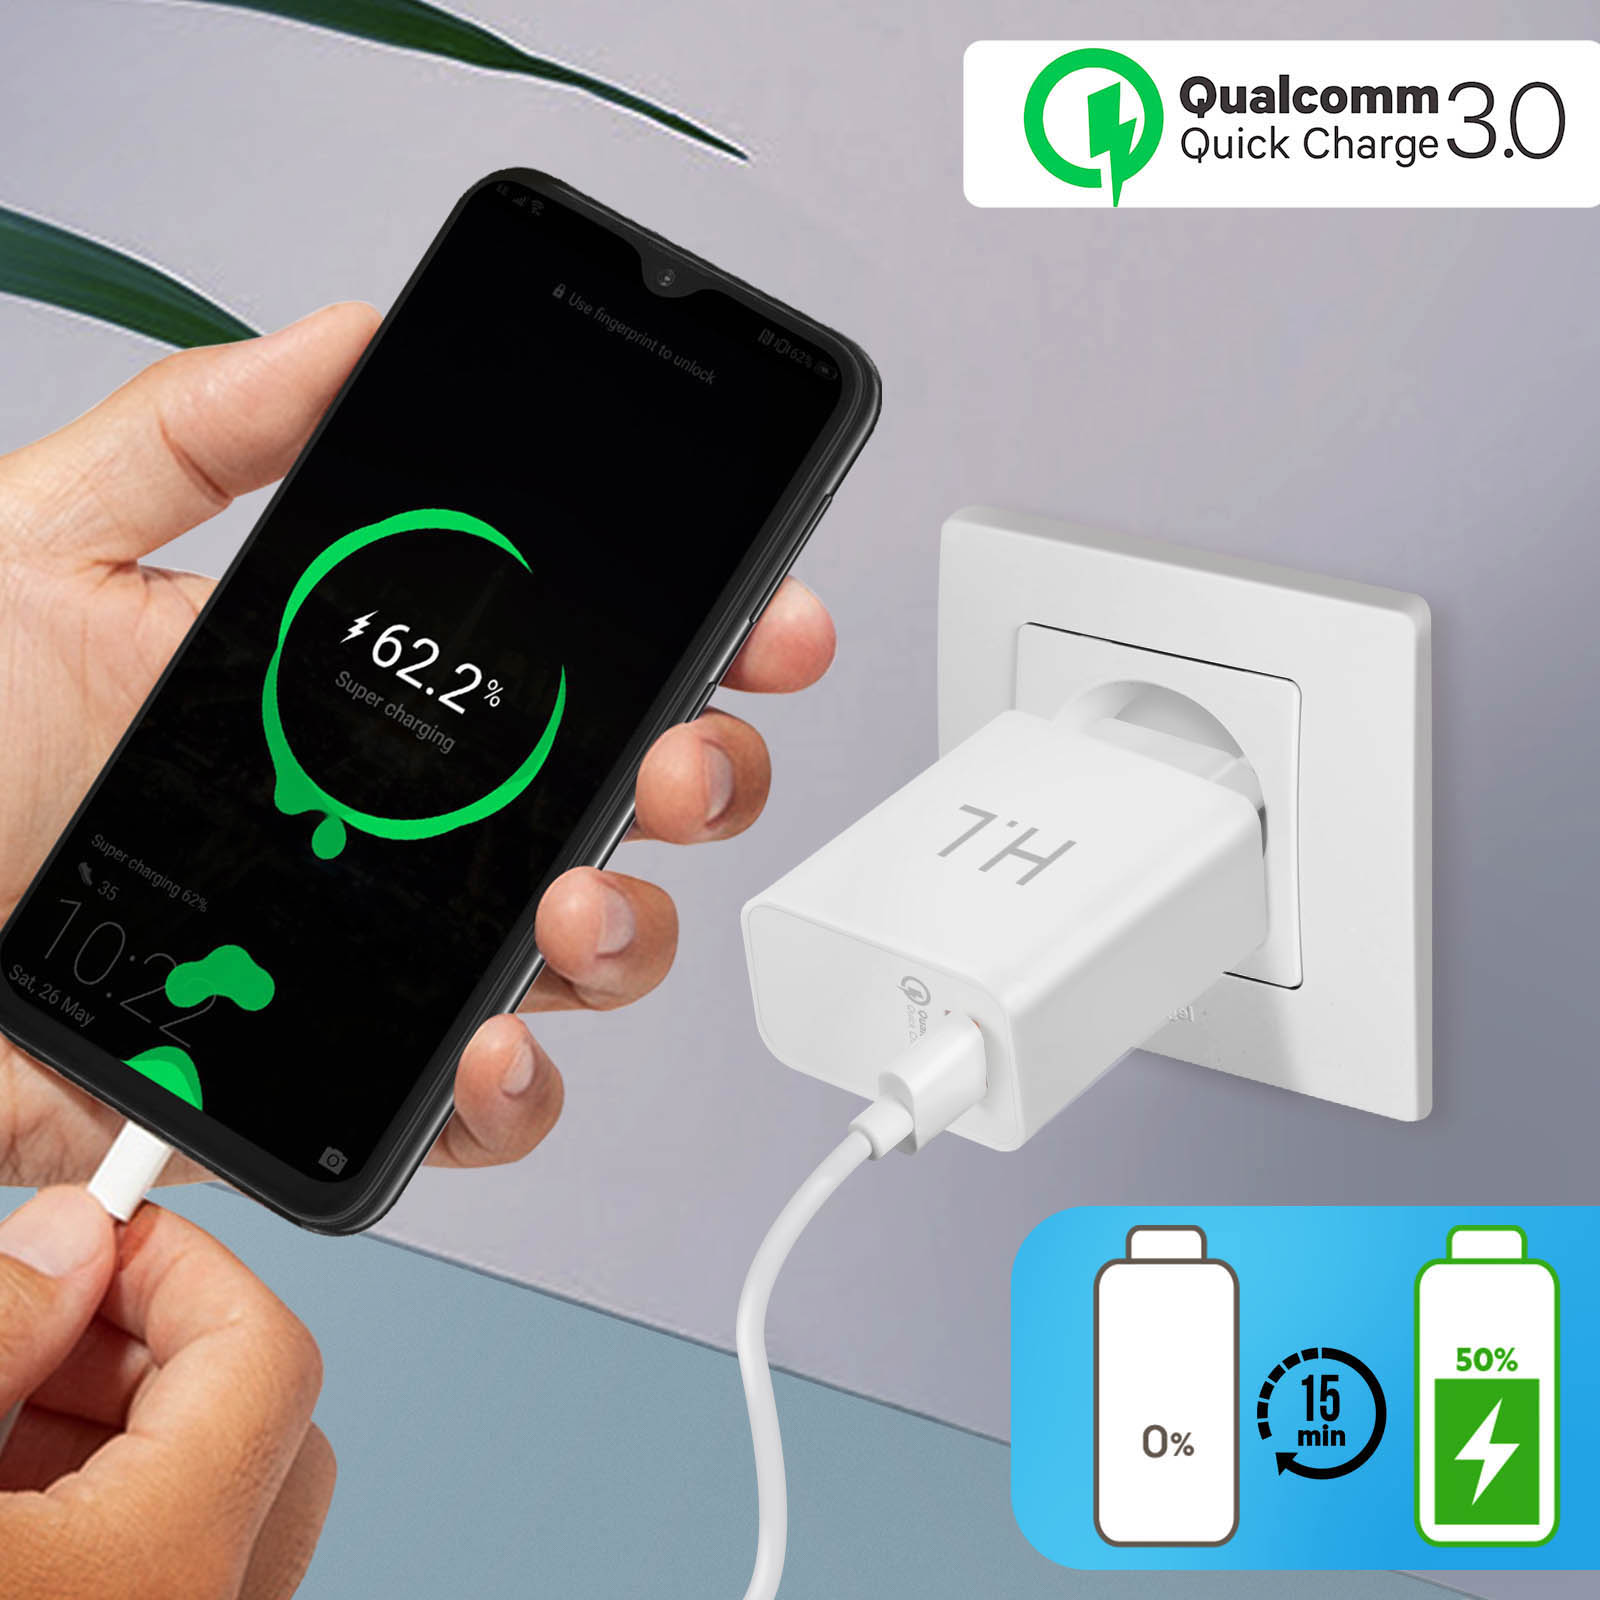 Chargeur iPhone 3A Qualcomm Quick Charge 3.0 avec câble lightning